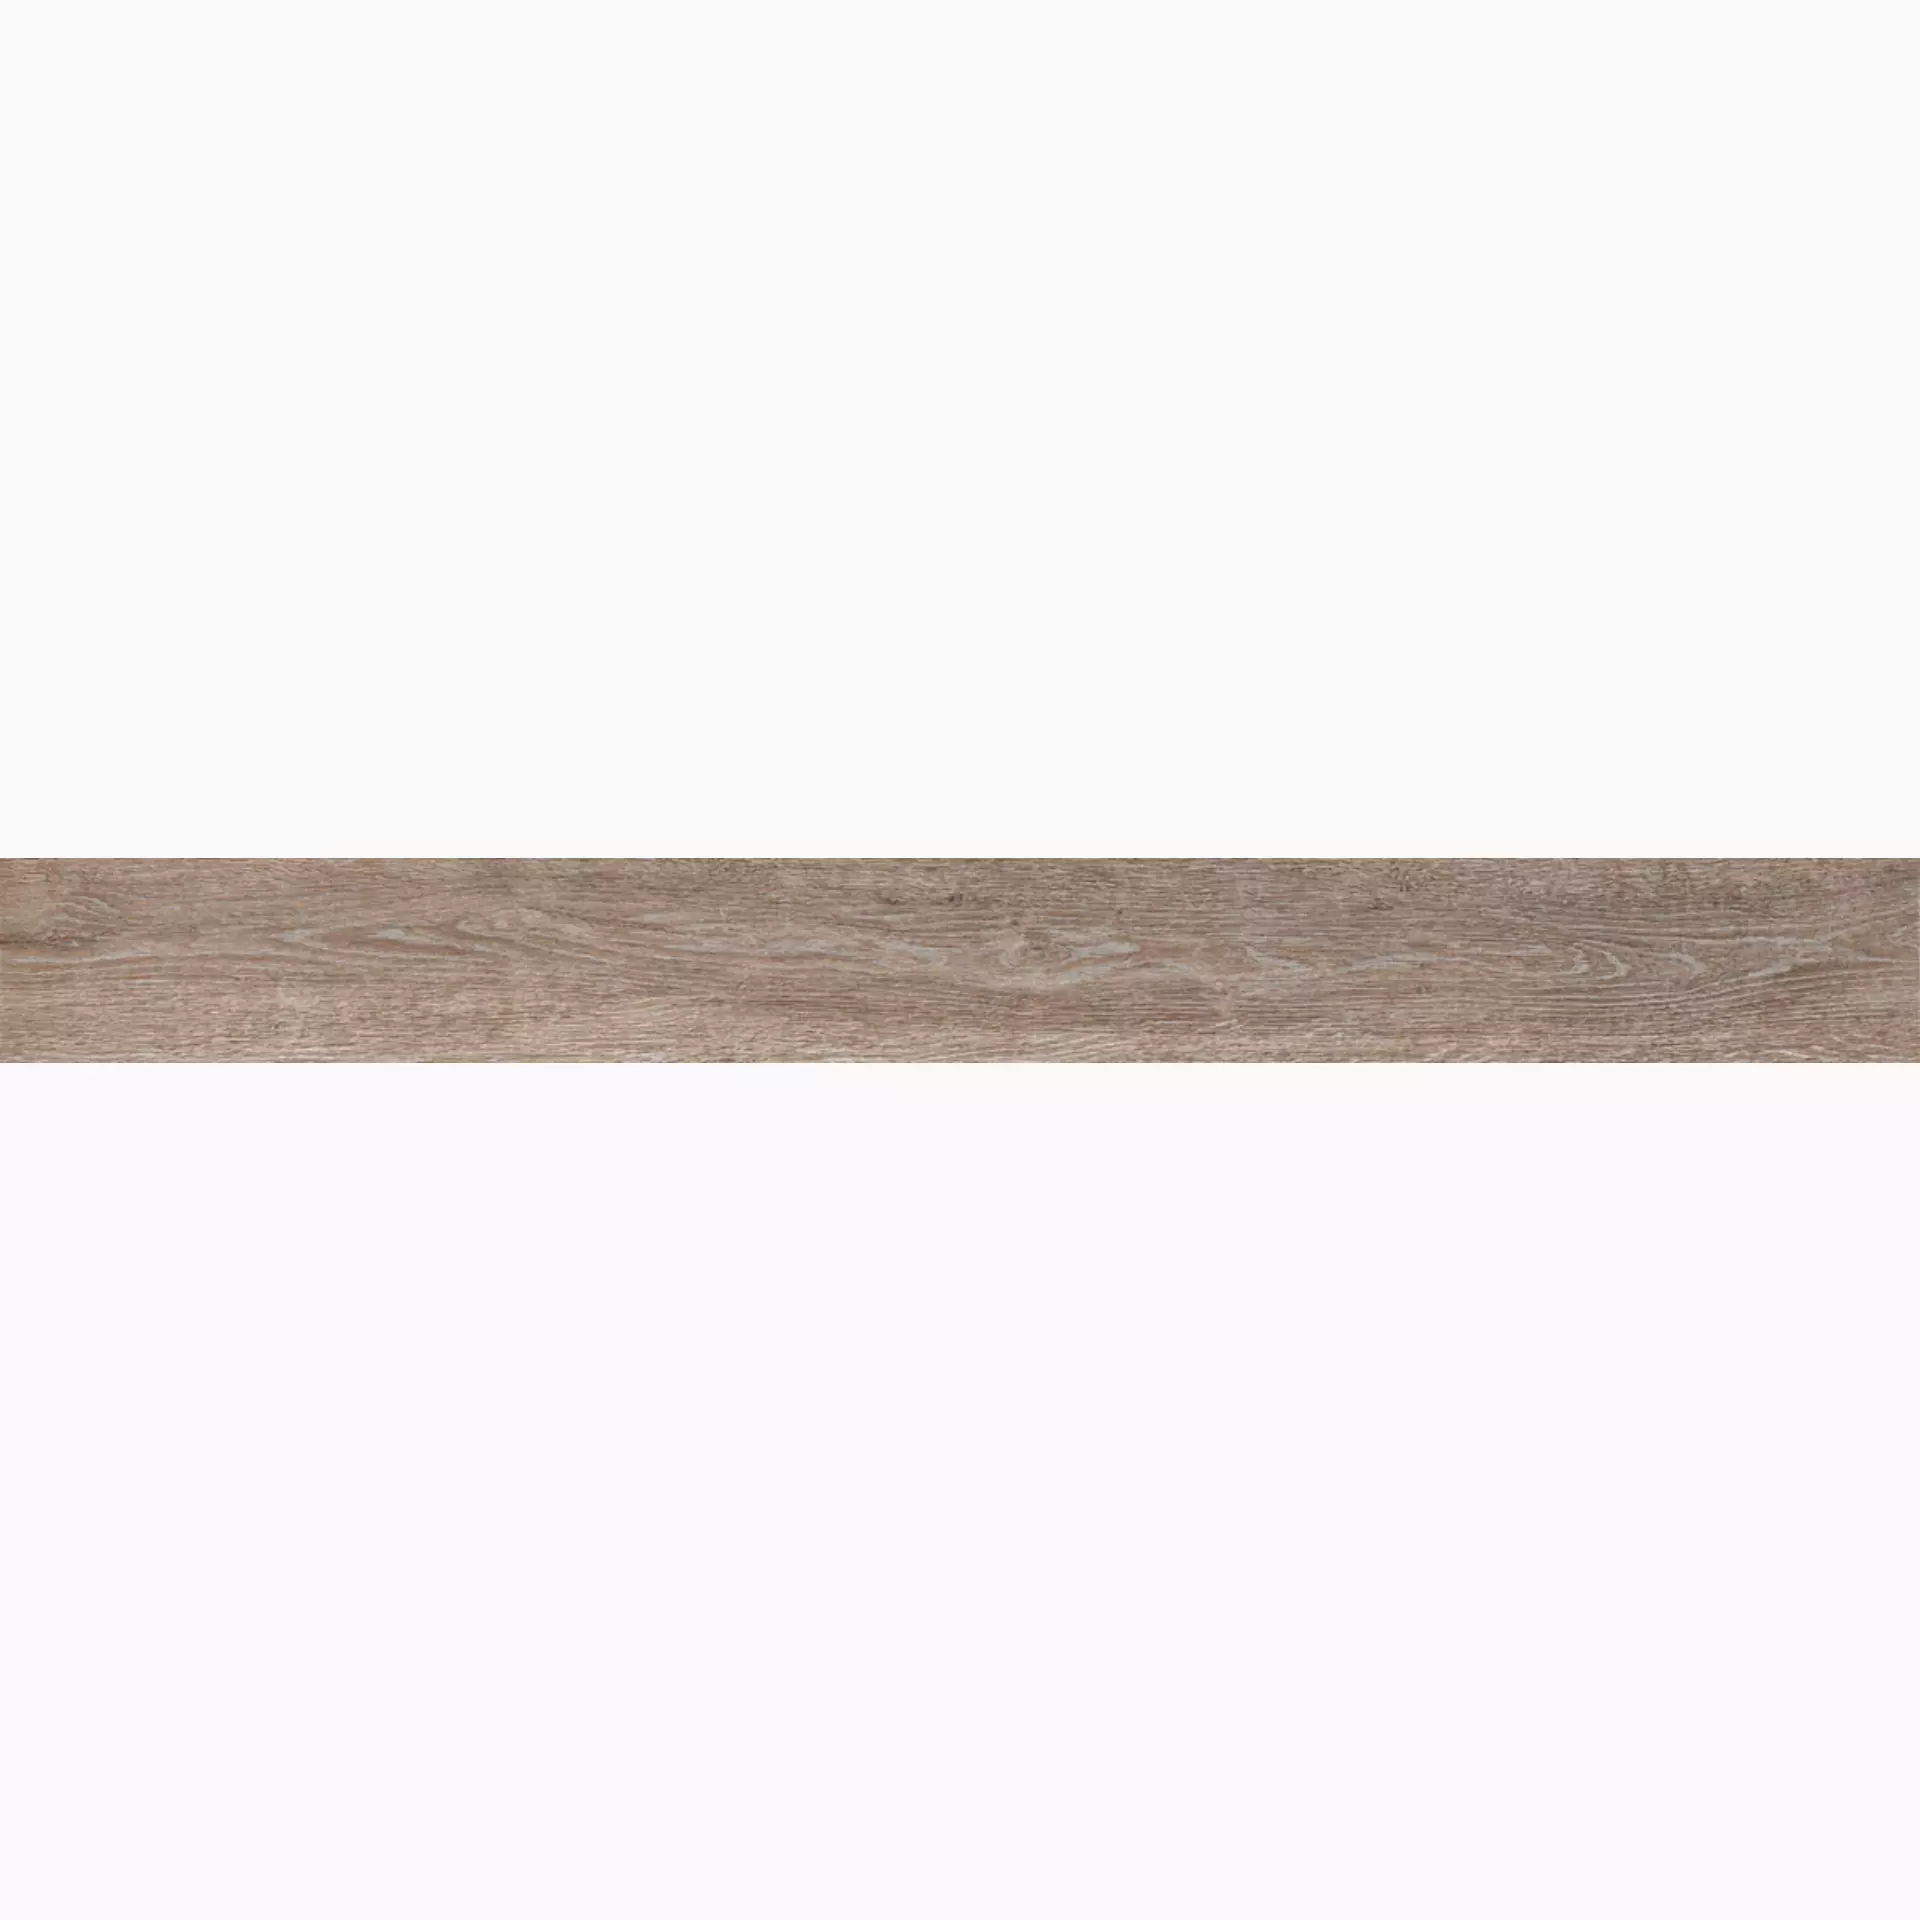 La Faenza Legno Brown Natural Slate Cut Matt 170463 20x180cm rectified 10mm - LEGNO 2018T RM